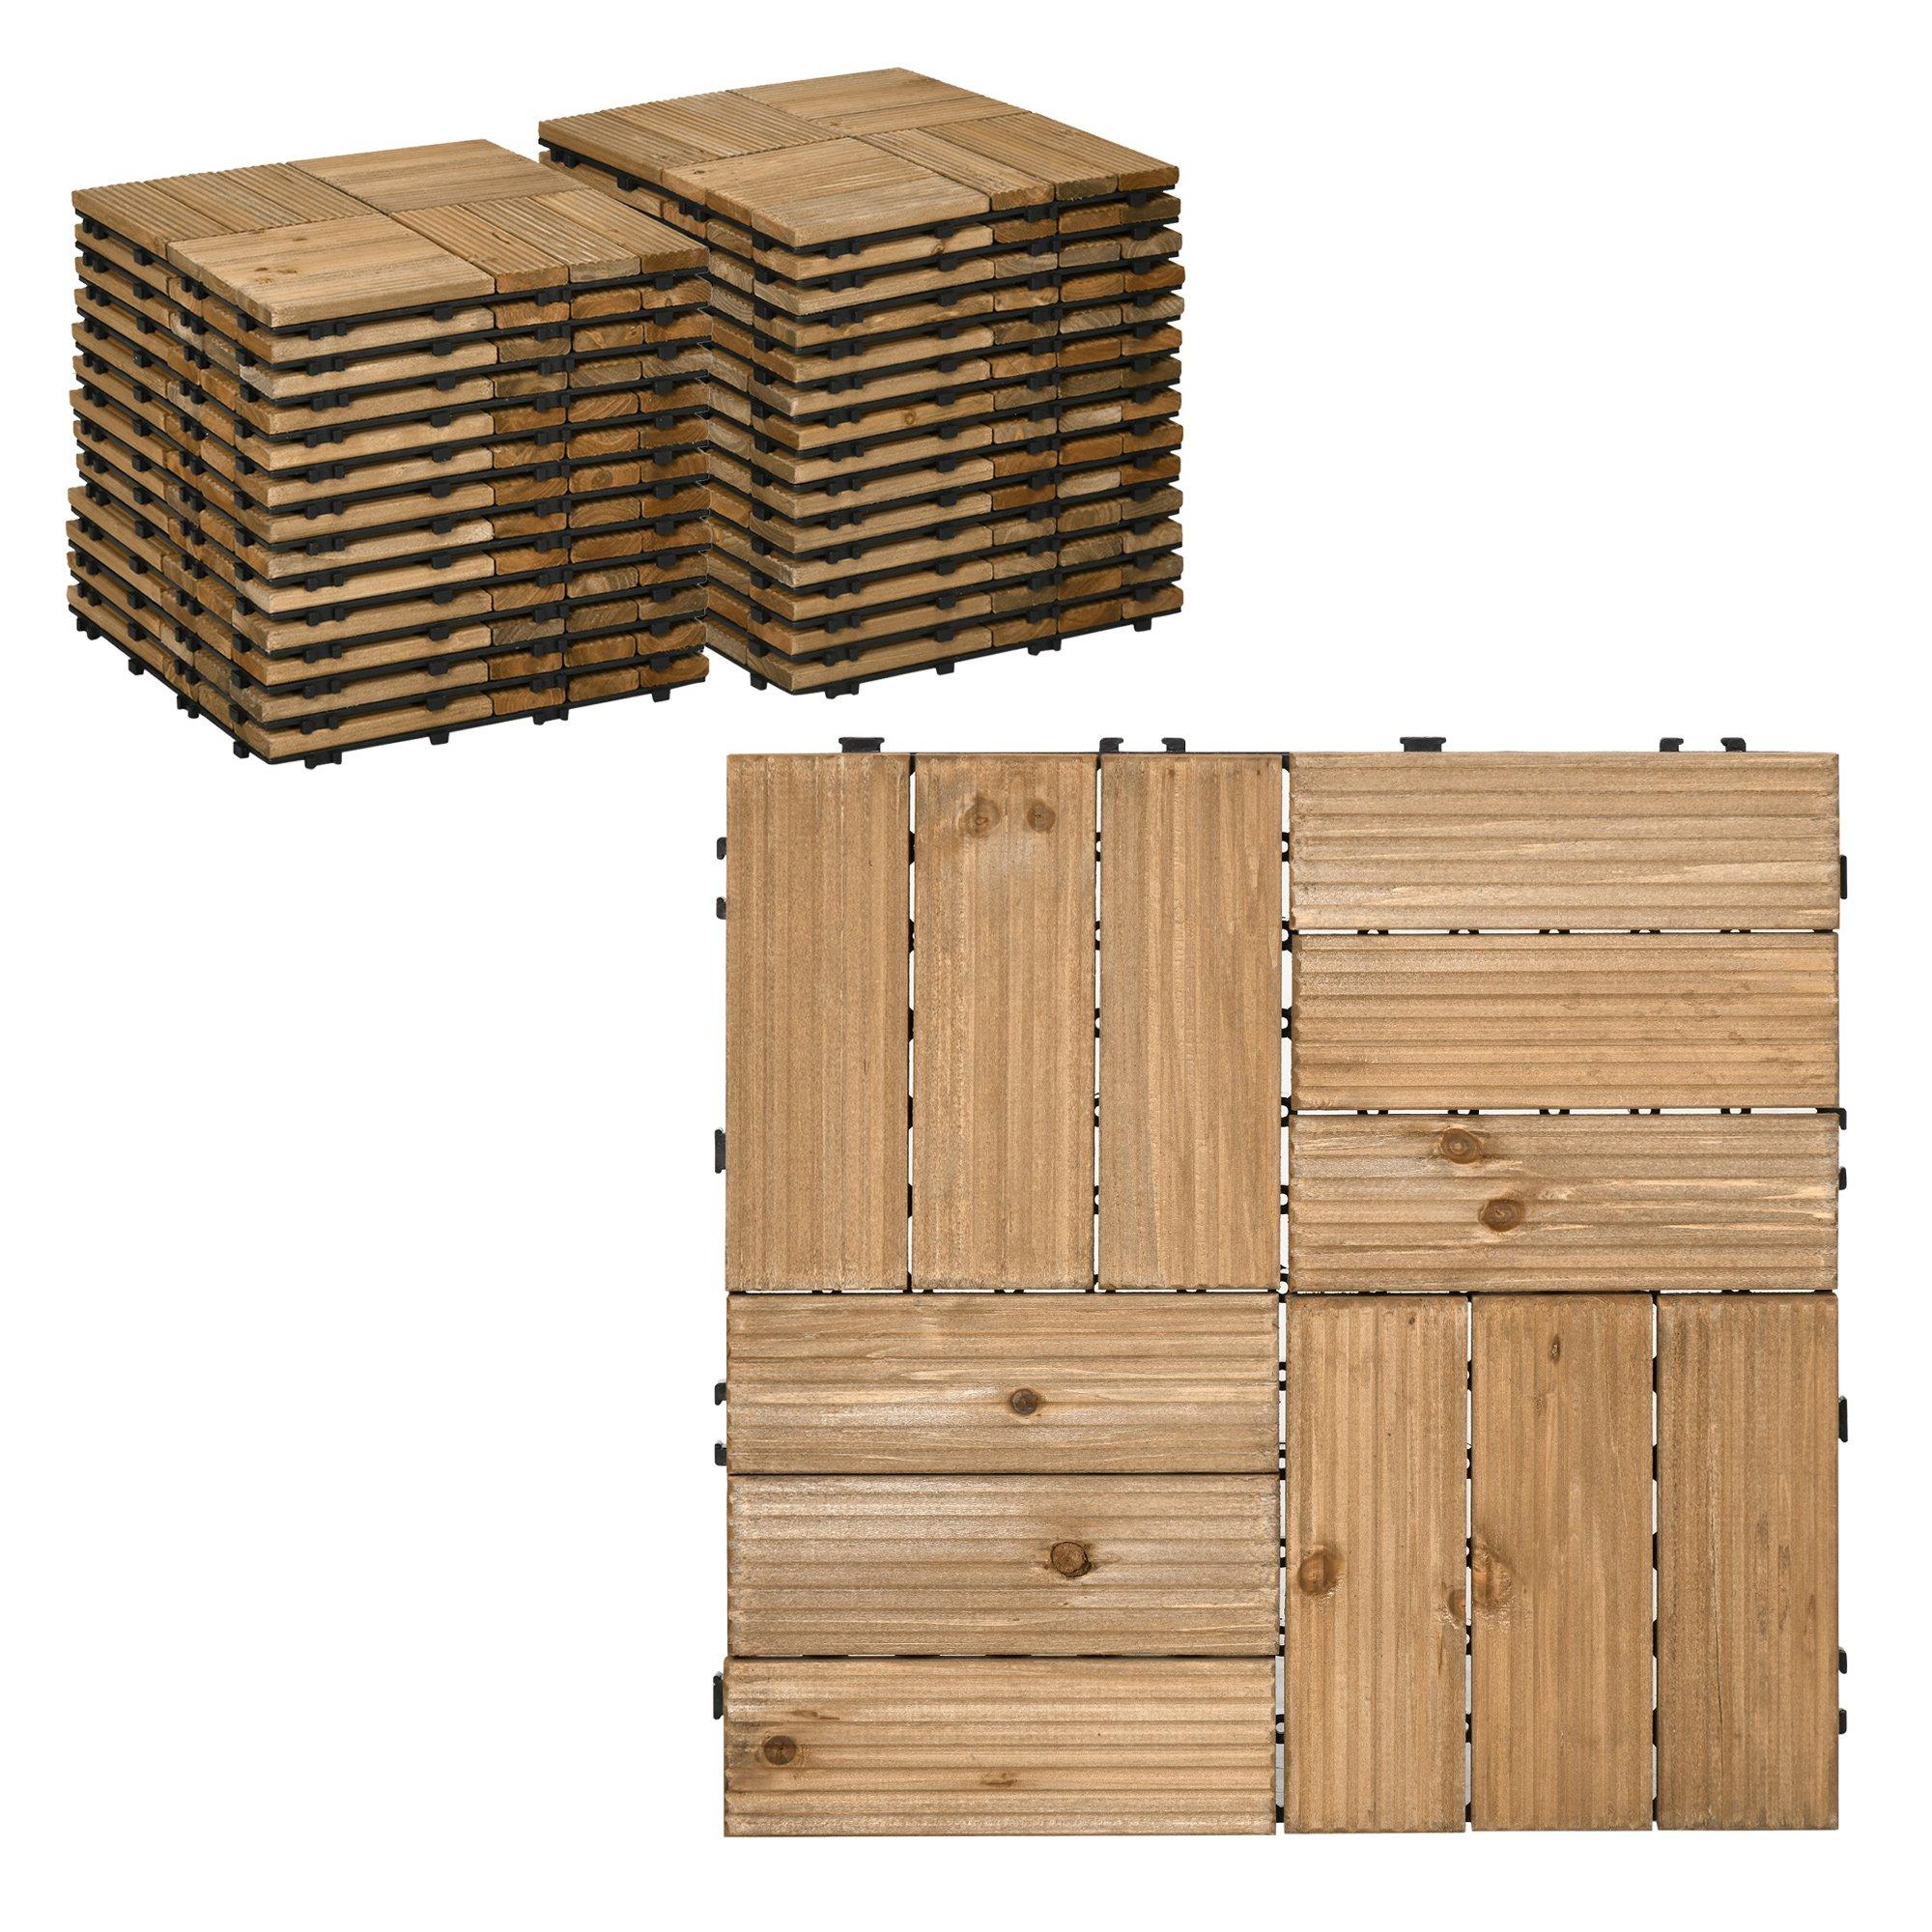 Pack of 27 Interlocking Decking Tiles 30x30cm Outdoor Flooring, 2.5m^2